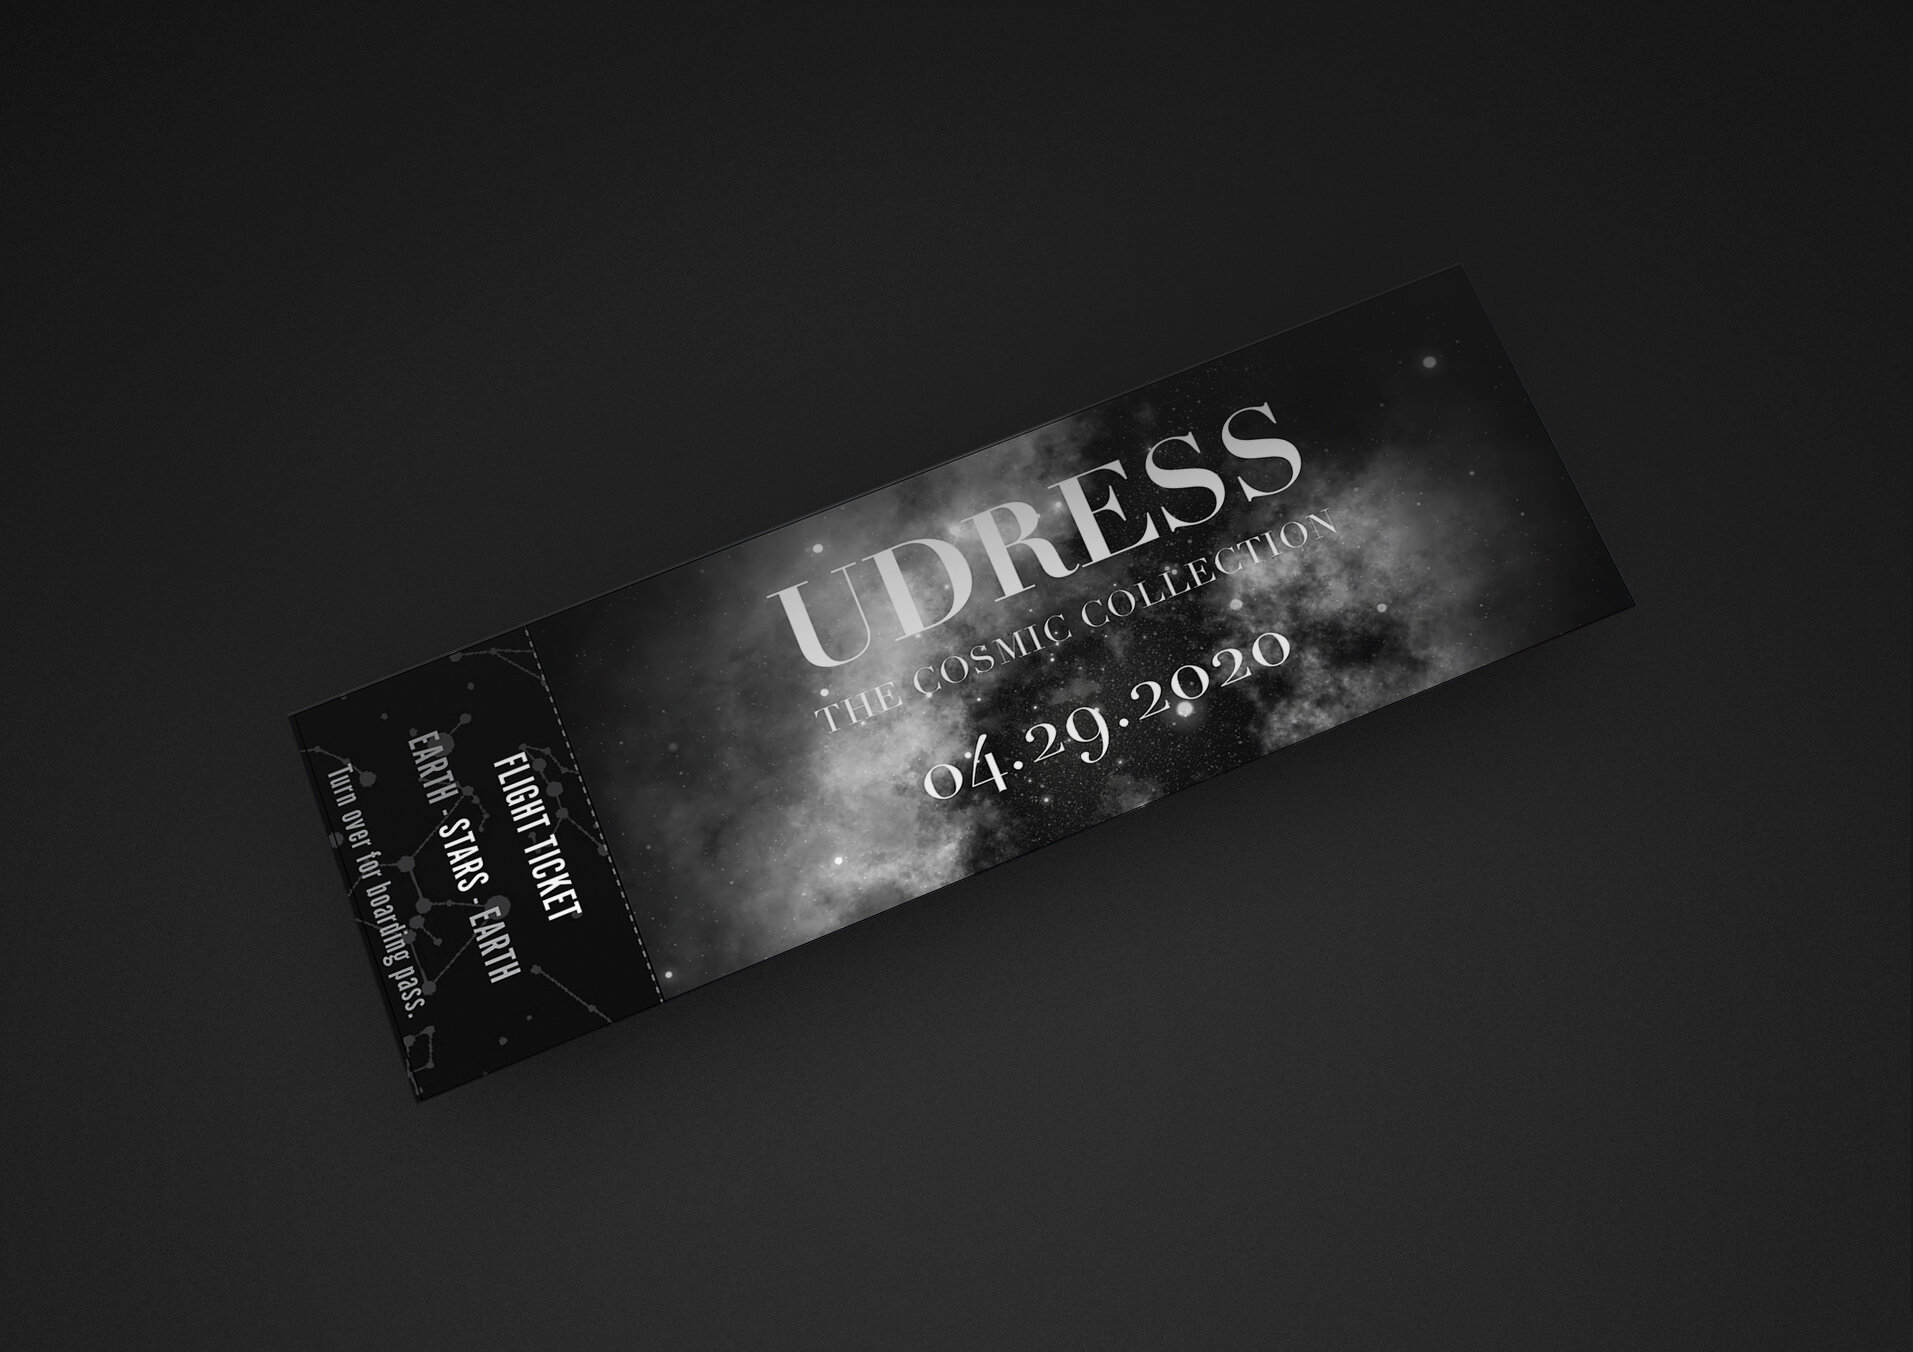 UDress 2020 Fashion Show Ticket (Front)